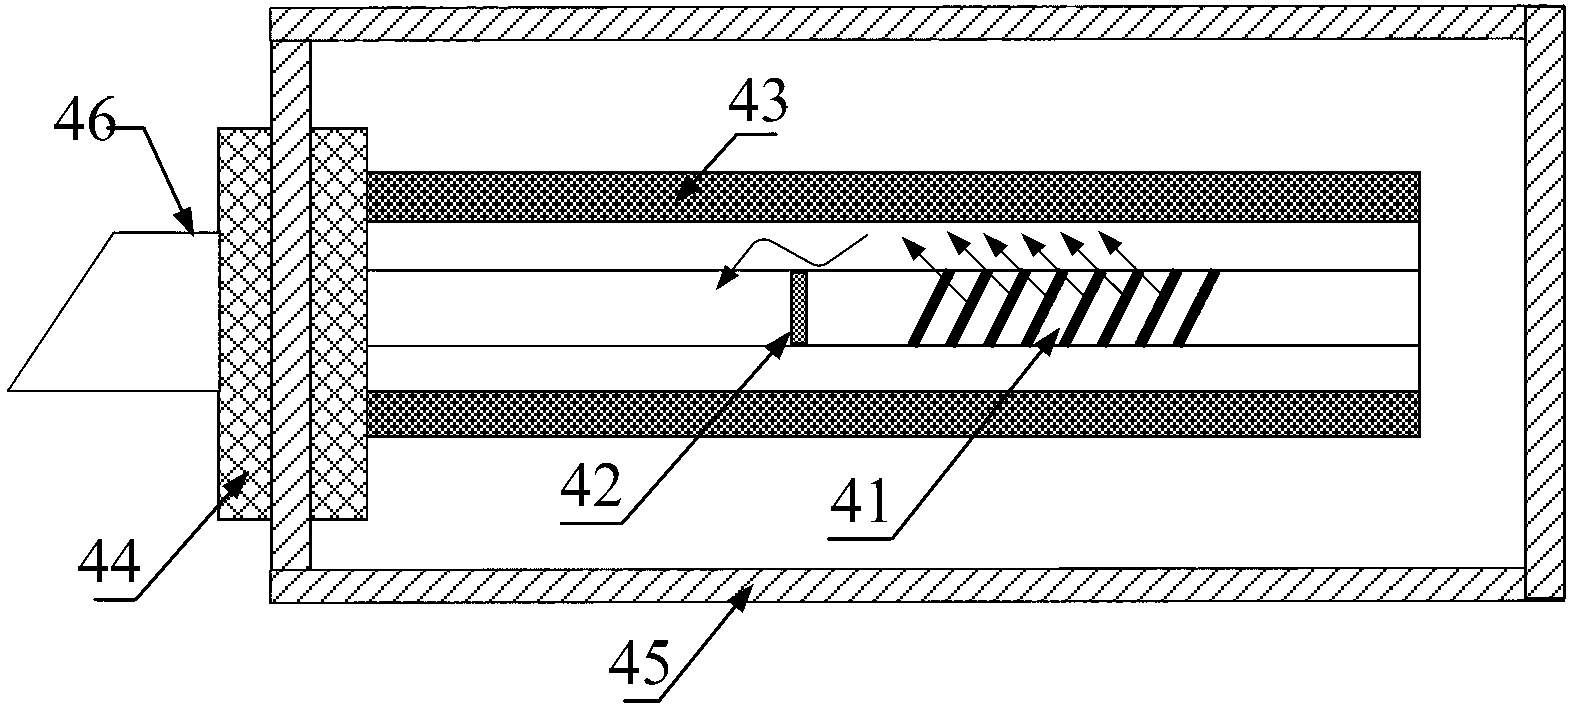 System and method for sensing VCSEL (Vertical Cavity Surface Emitting Laser) based ultrahigh-speed FBG (Fiber Bragg Grating)